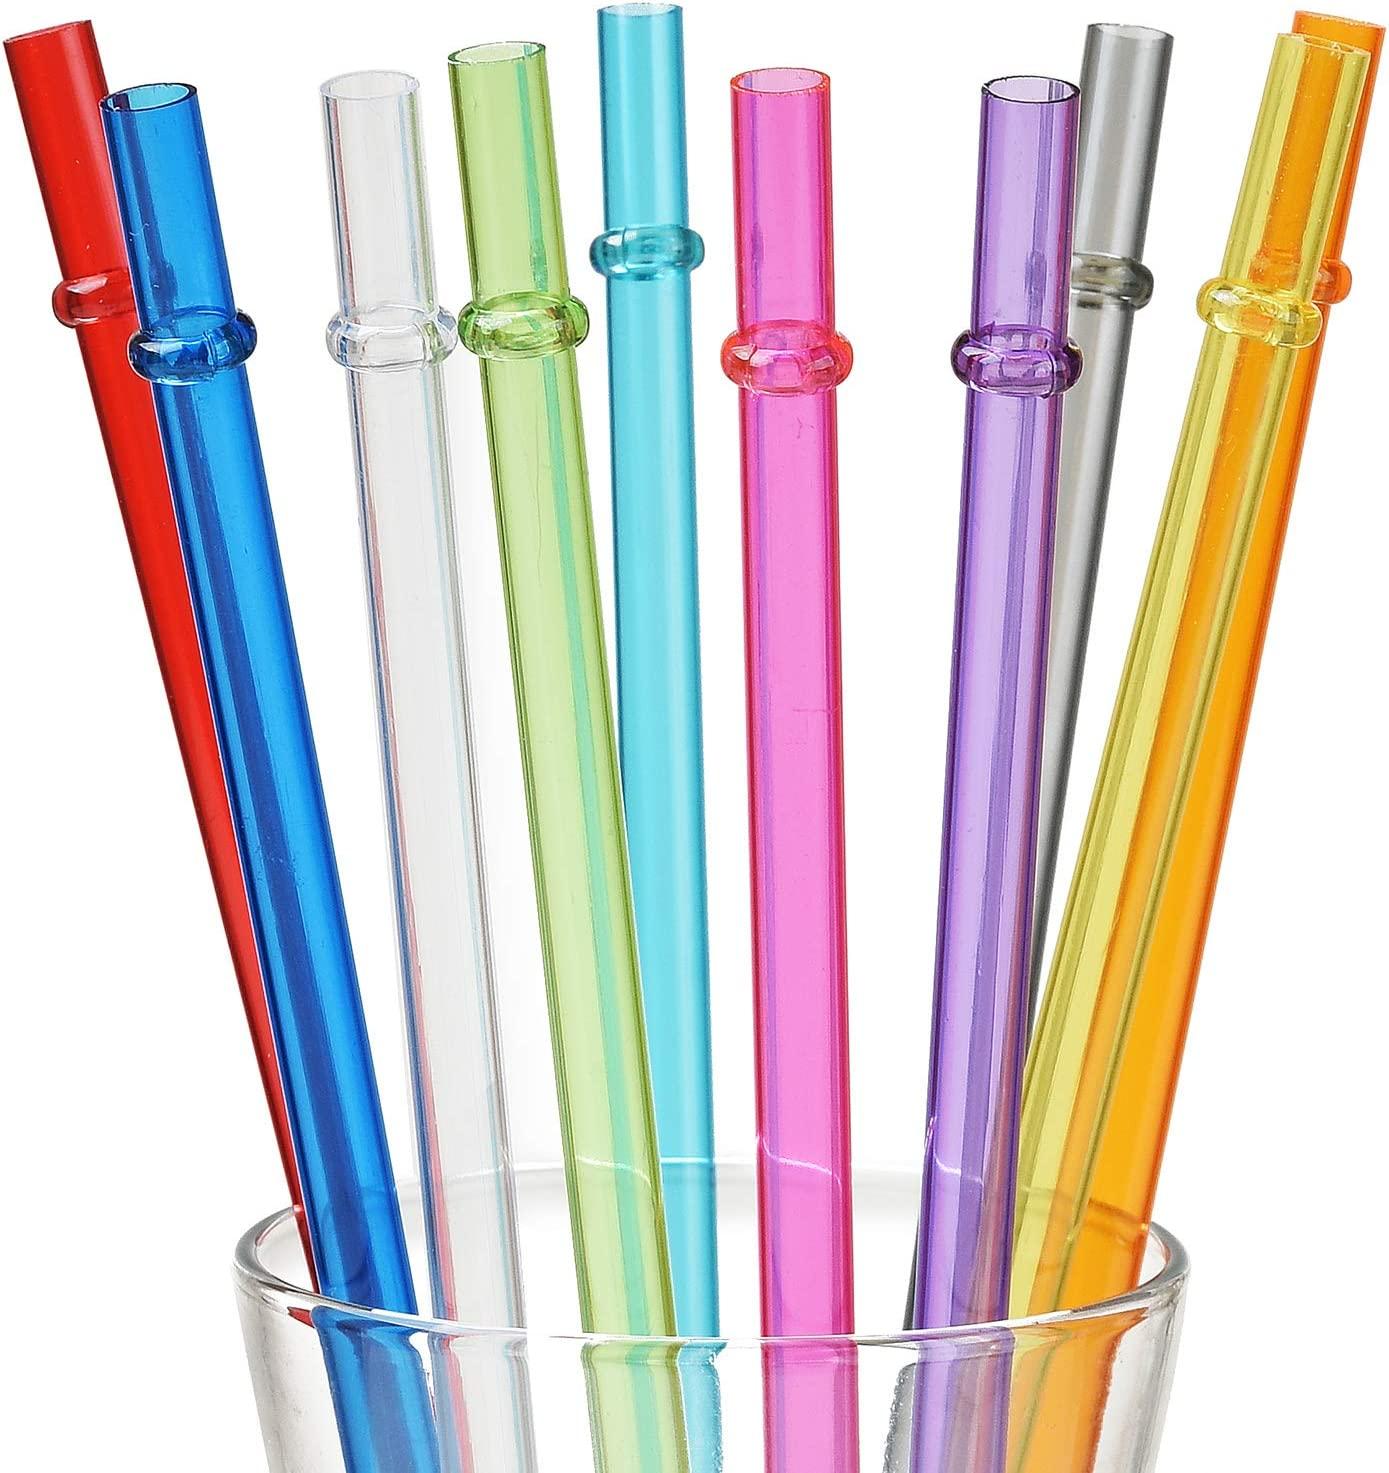  ALINK 13 inch Reusable Plastic Straws, Extra Long